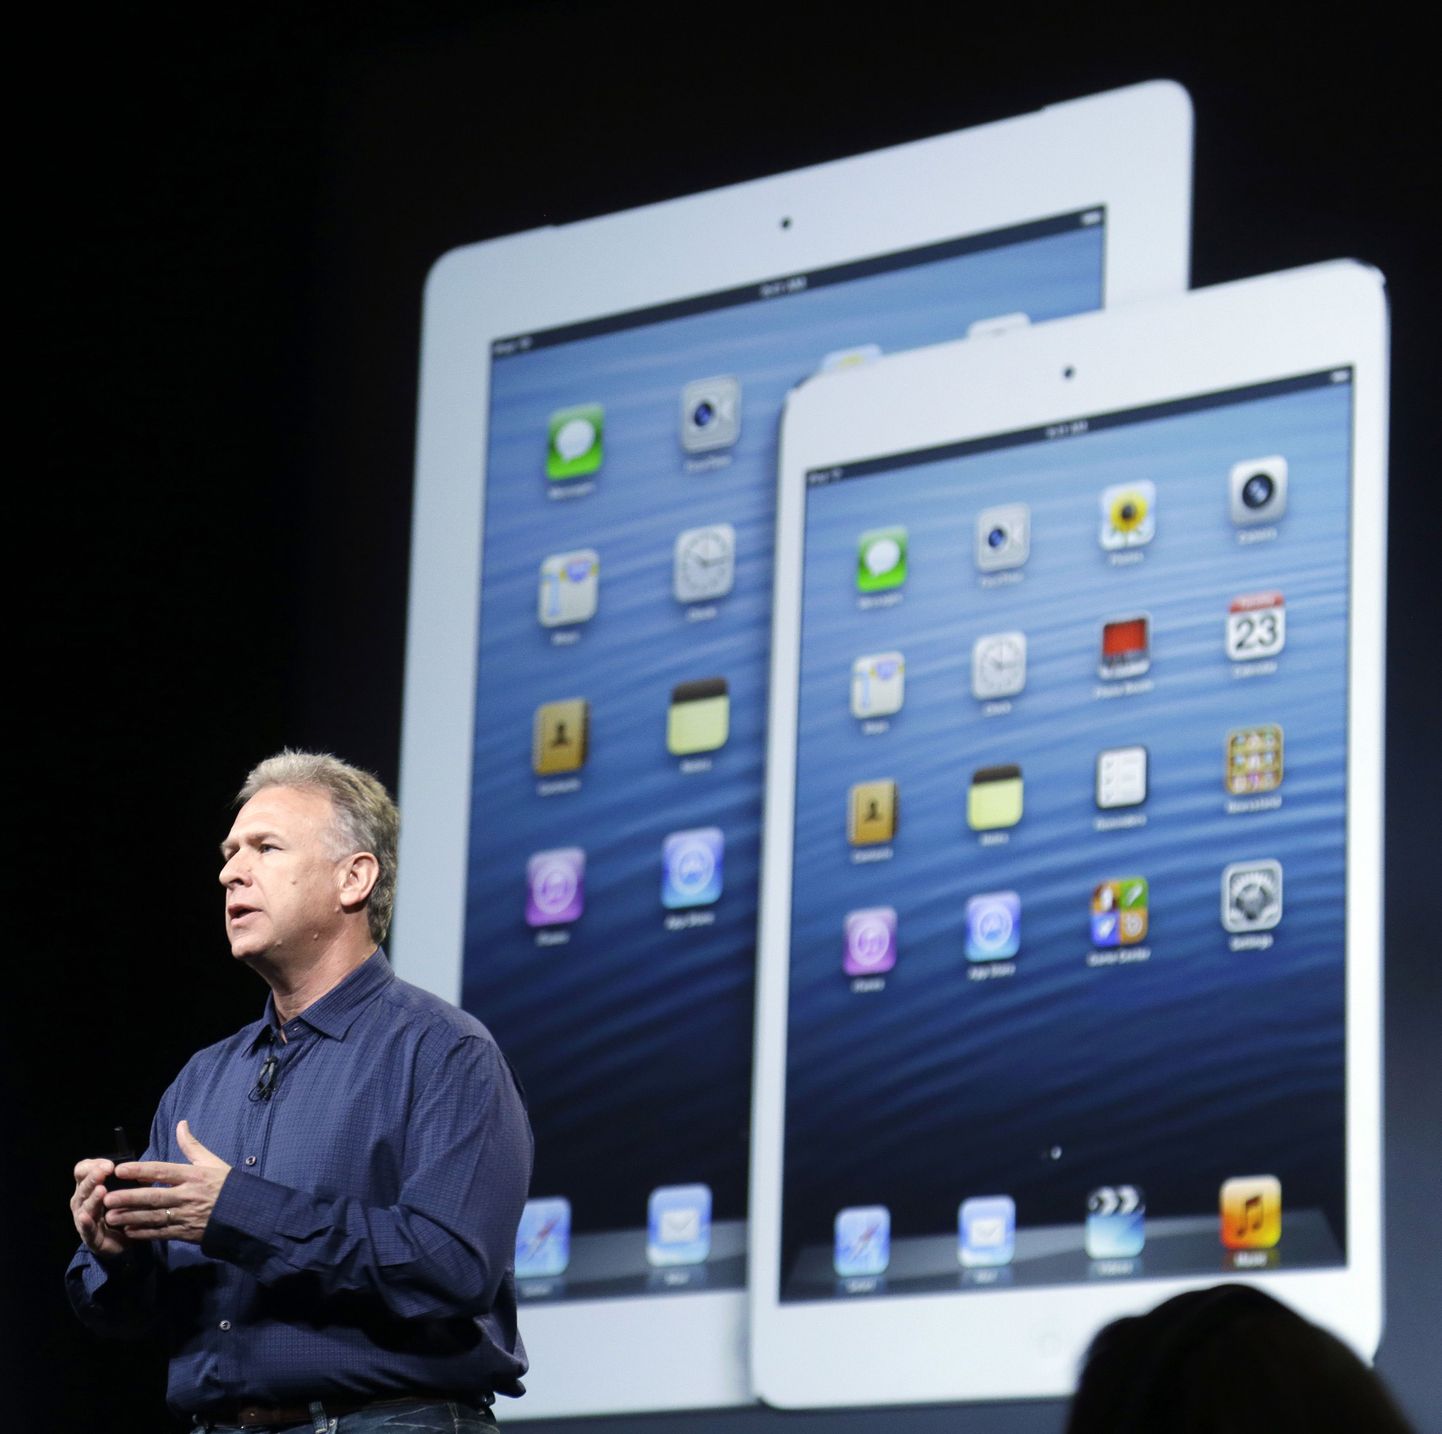 iPad 4-го поколения (слева) и iPad mini (справа)